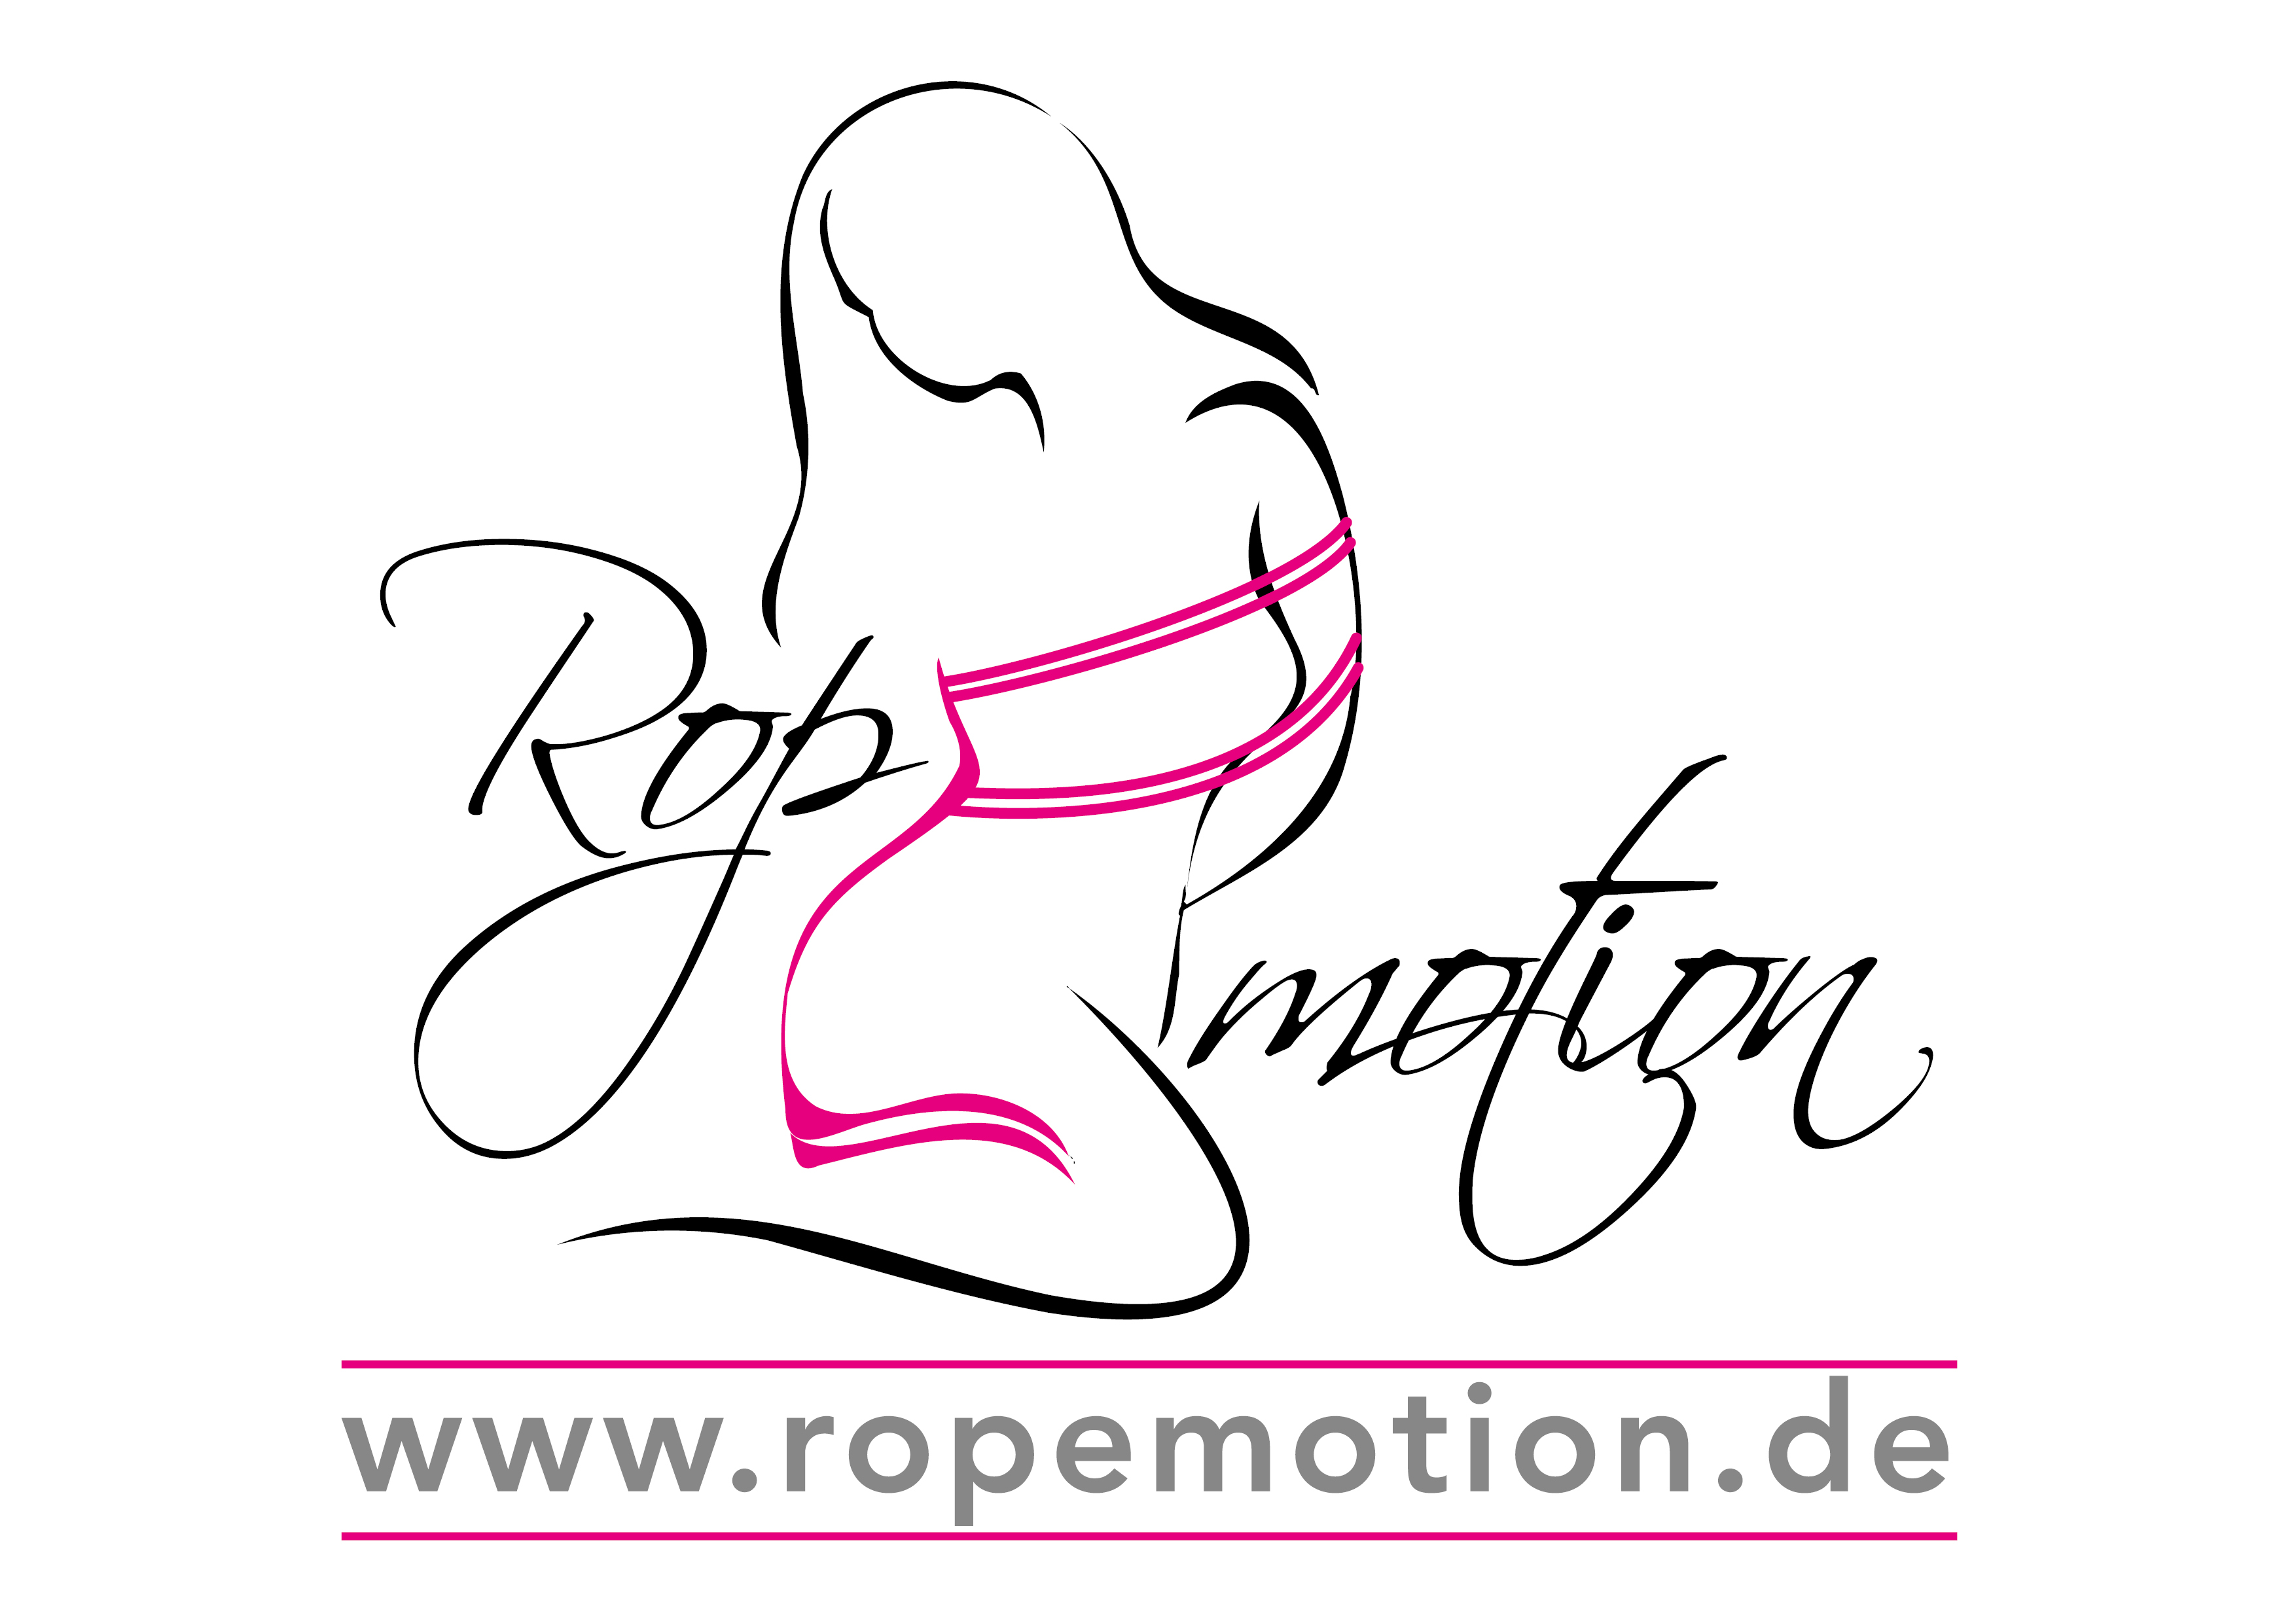 RopEmotion